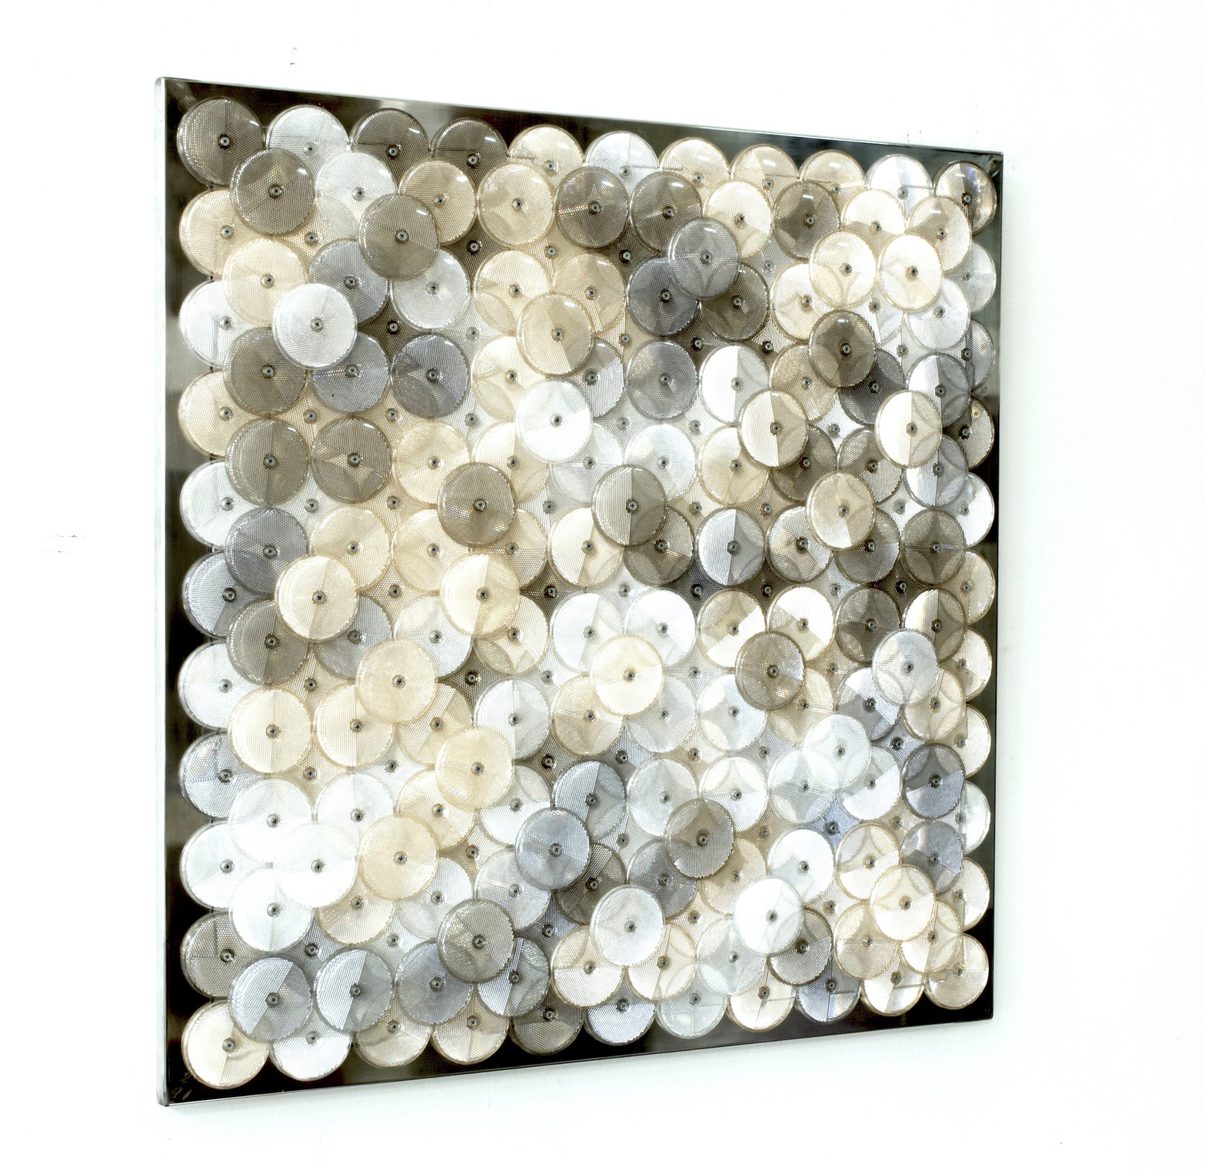 ‘Dust (peach)’, 2019, customised corner reflectors, polished aluminium, 97 x 97 cm